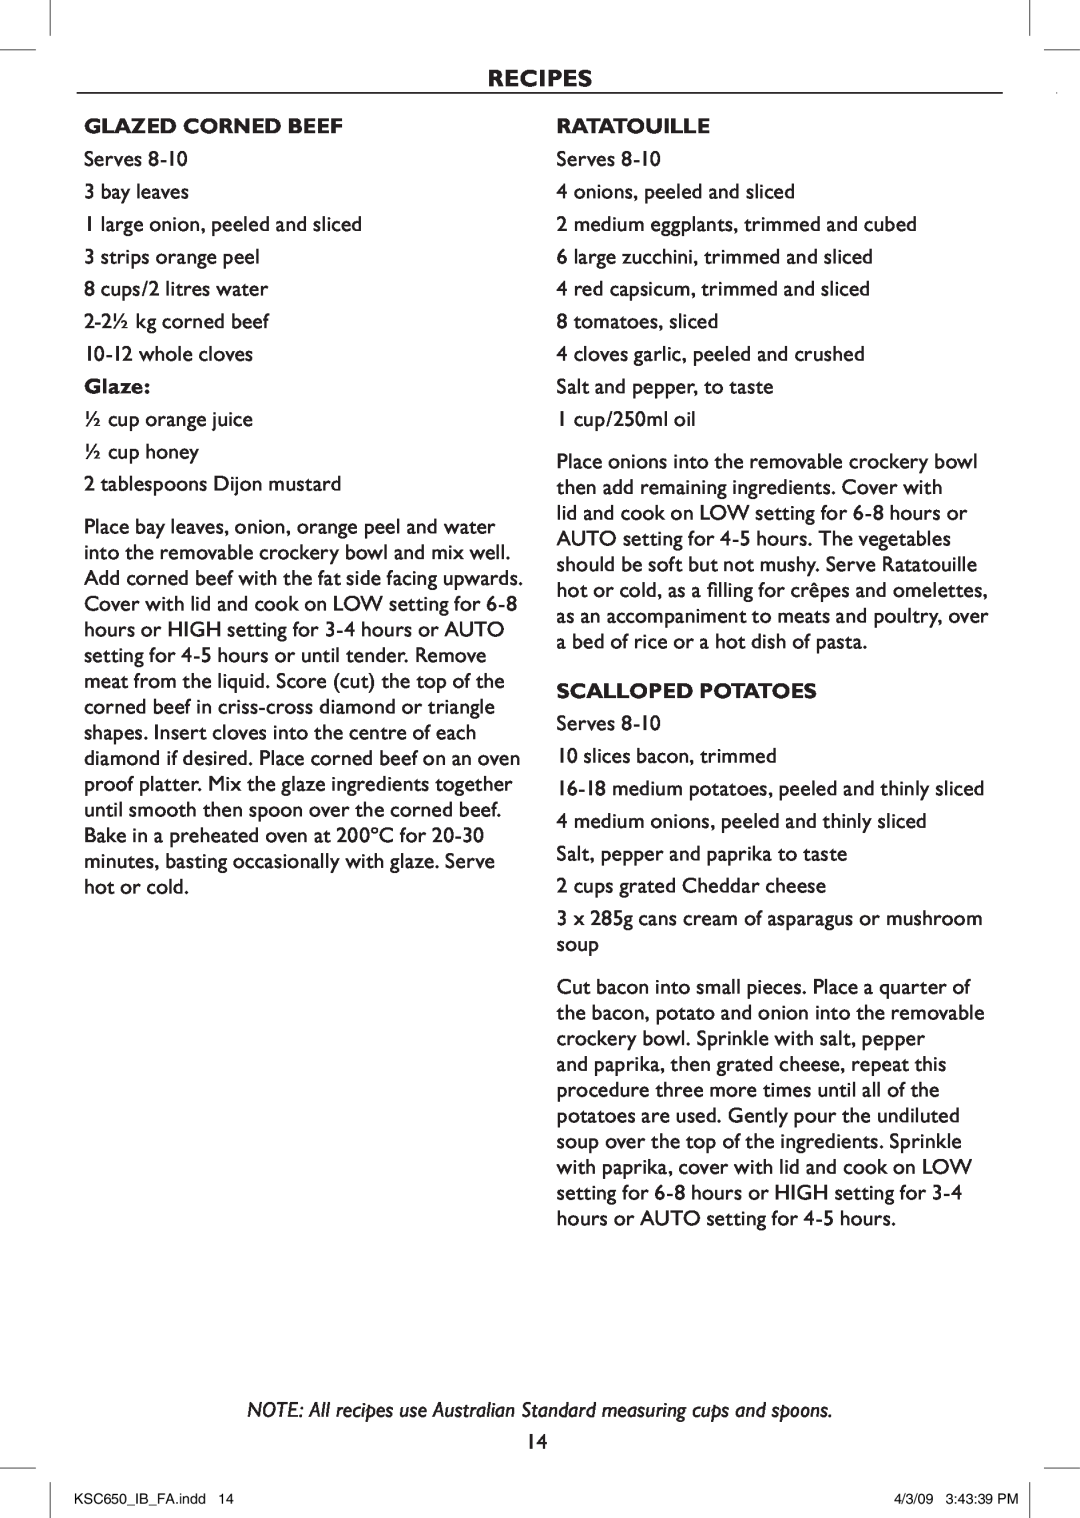 Kambrook KSC650 manual Recipes, Glazed Corned Beef, Ratatouille, Scalloped Potatoes 